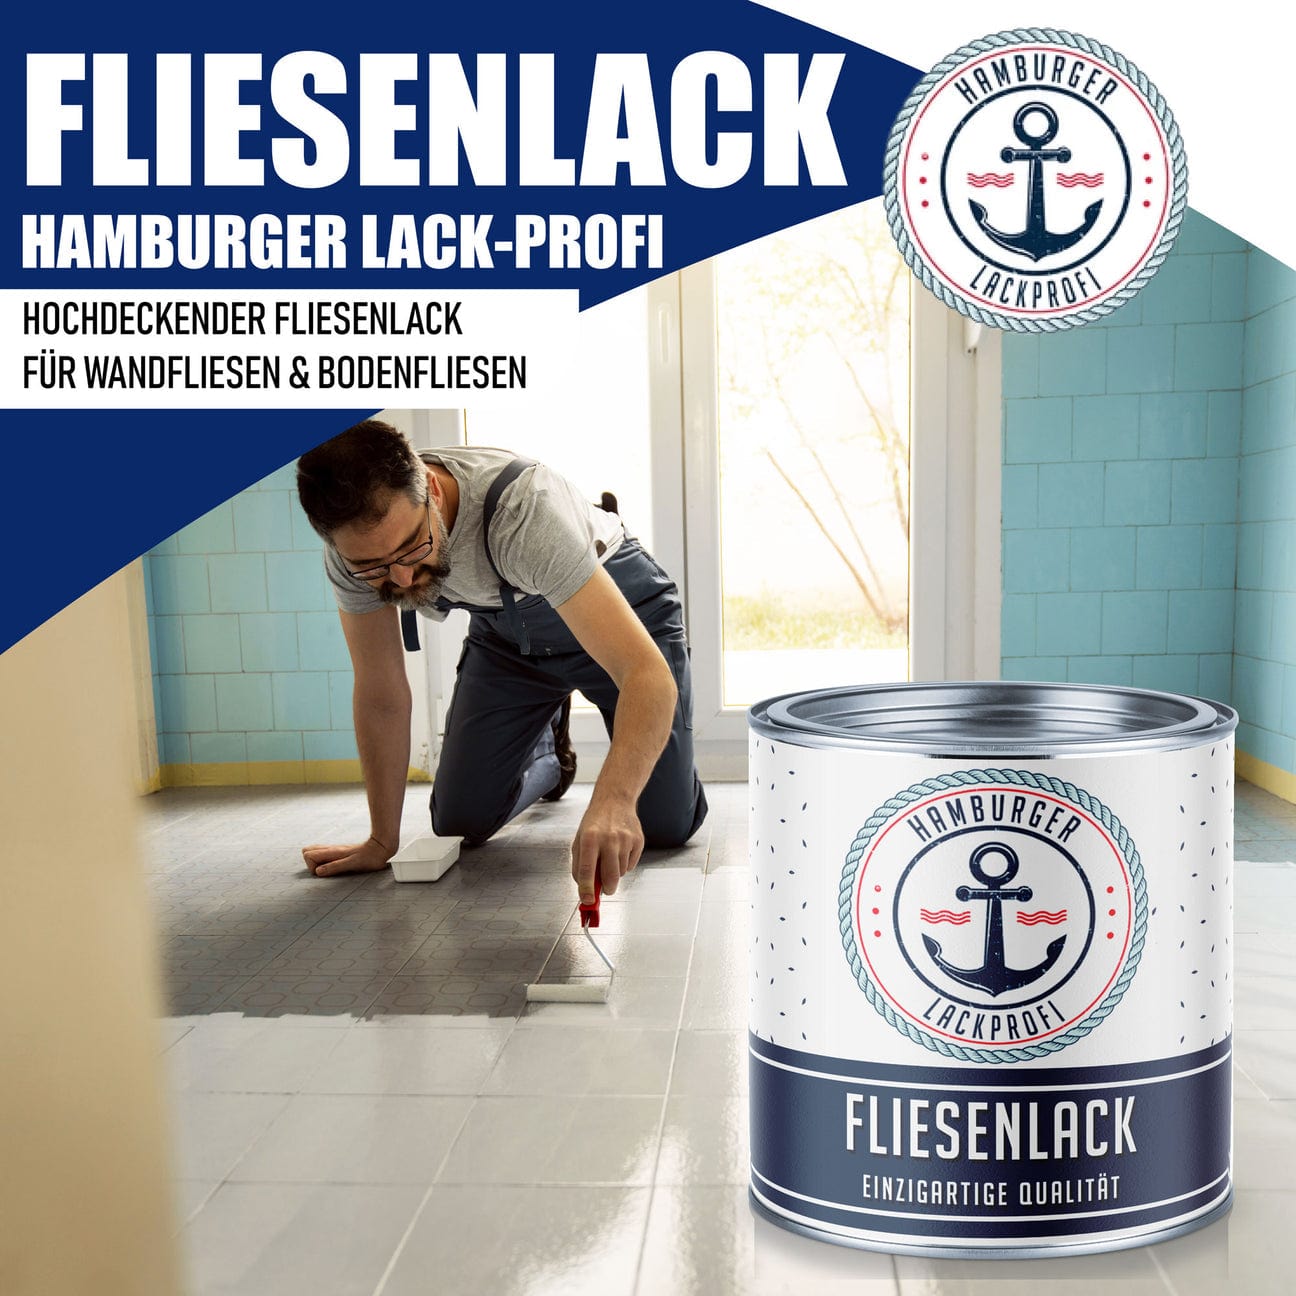 Hamburger Lack-Profi Hamburger Lack-Profi Fliesenlack Schiefergrau RAL 7015 - hochdeckende Fliesenfarbe Grau